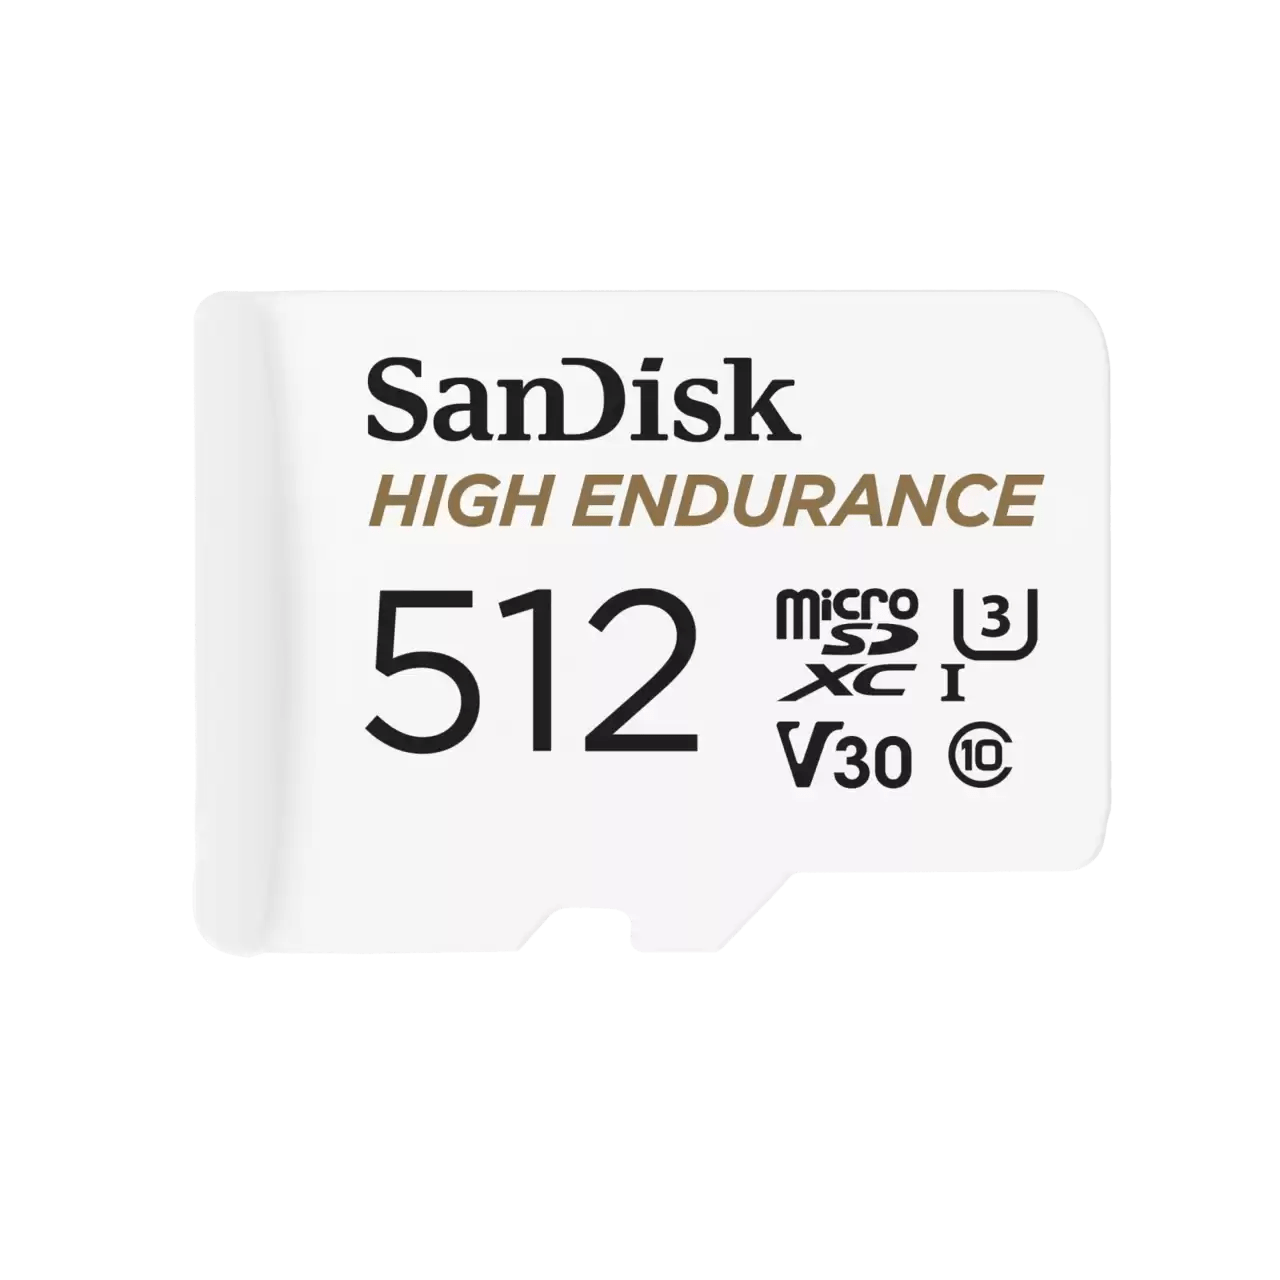 SanDisk High Endurance 512GB V30 U3 C10 UHS - I microSDXC 記憶卡 (SDSQQNR - 512G - GN6IA) - Fever Electrics 電器熱網購平台